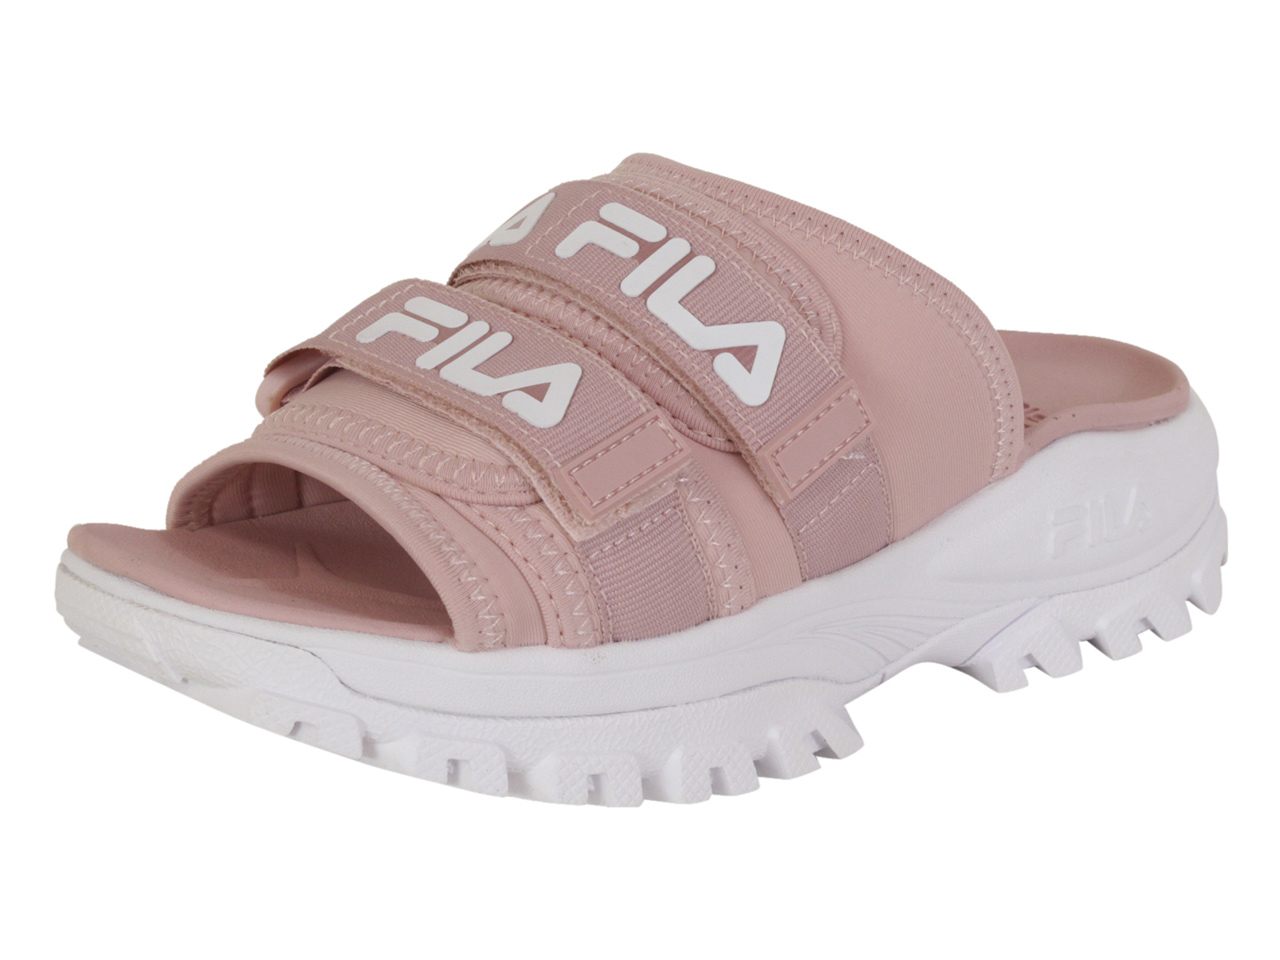 Fila Outdoor Slides Sandals Shoes | JoyLot.com